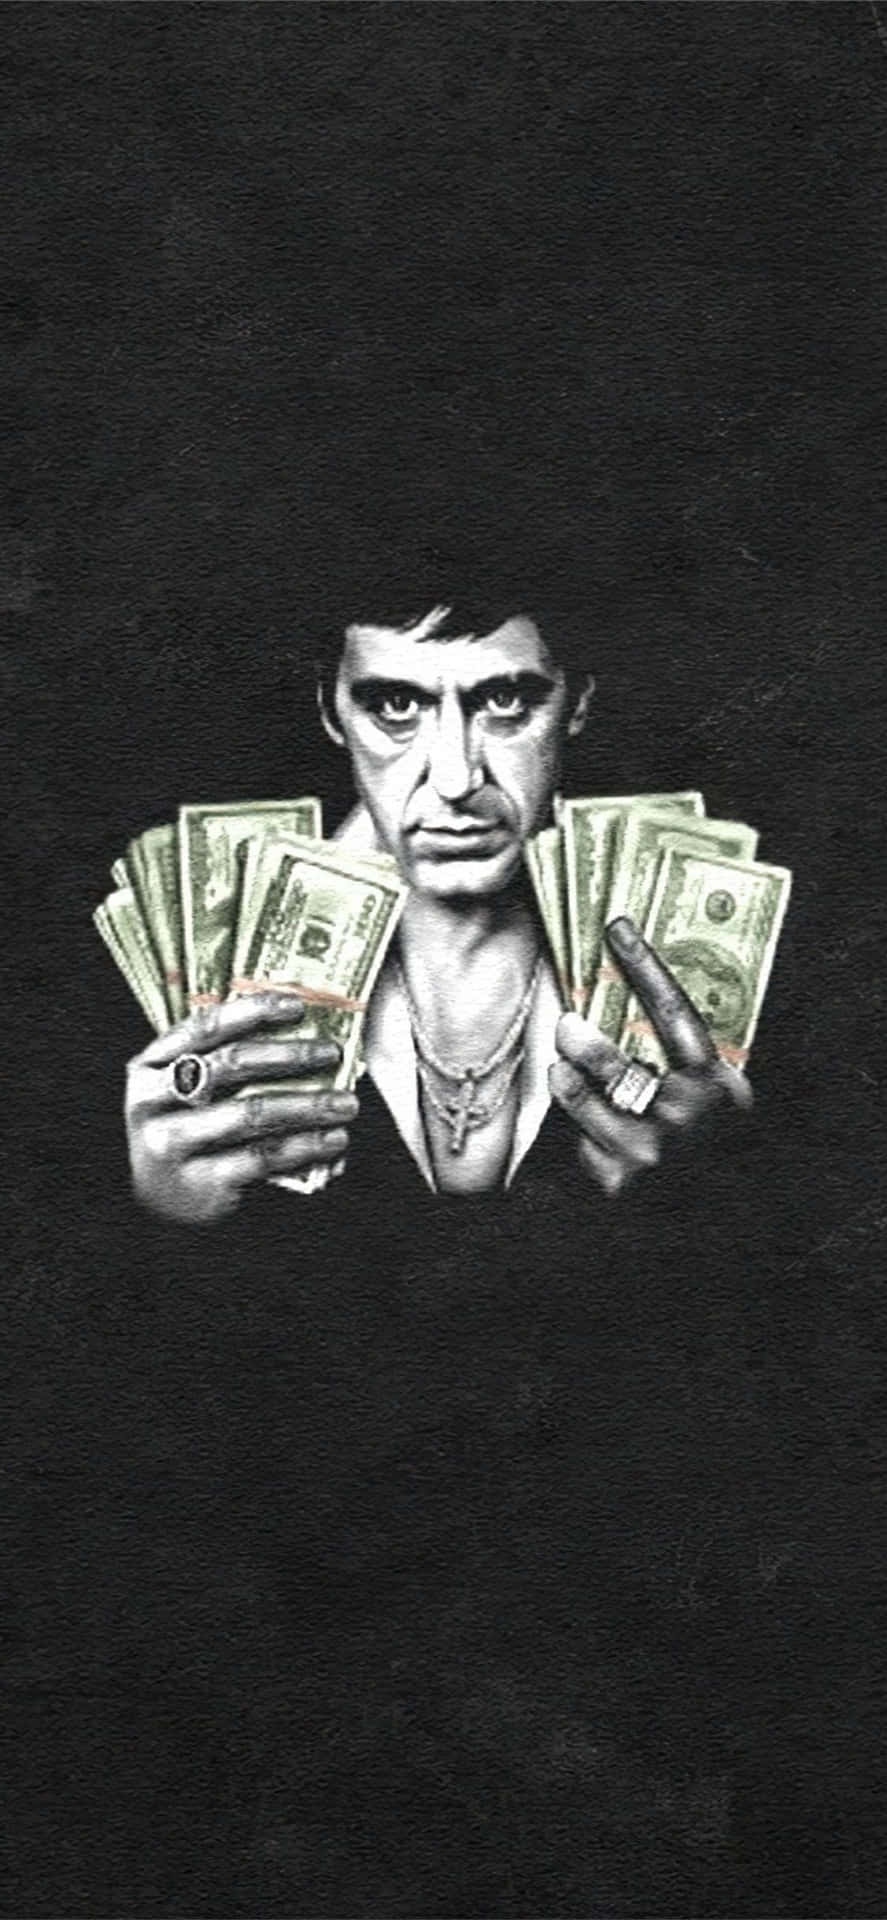 Tony Montana Money Power Artwork Background